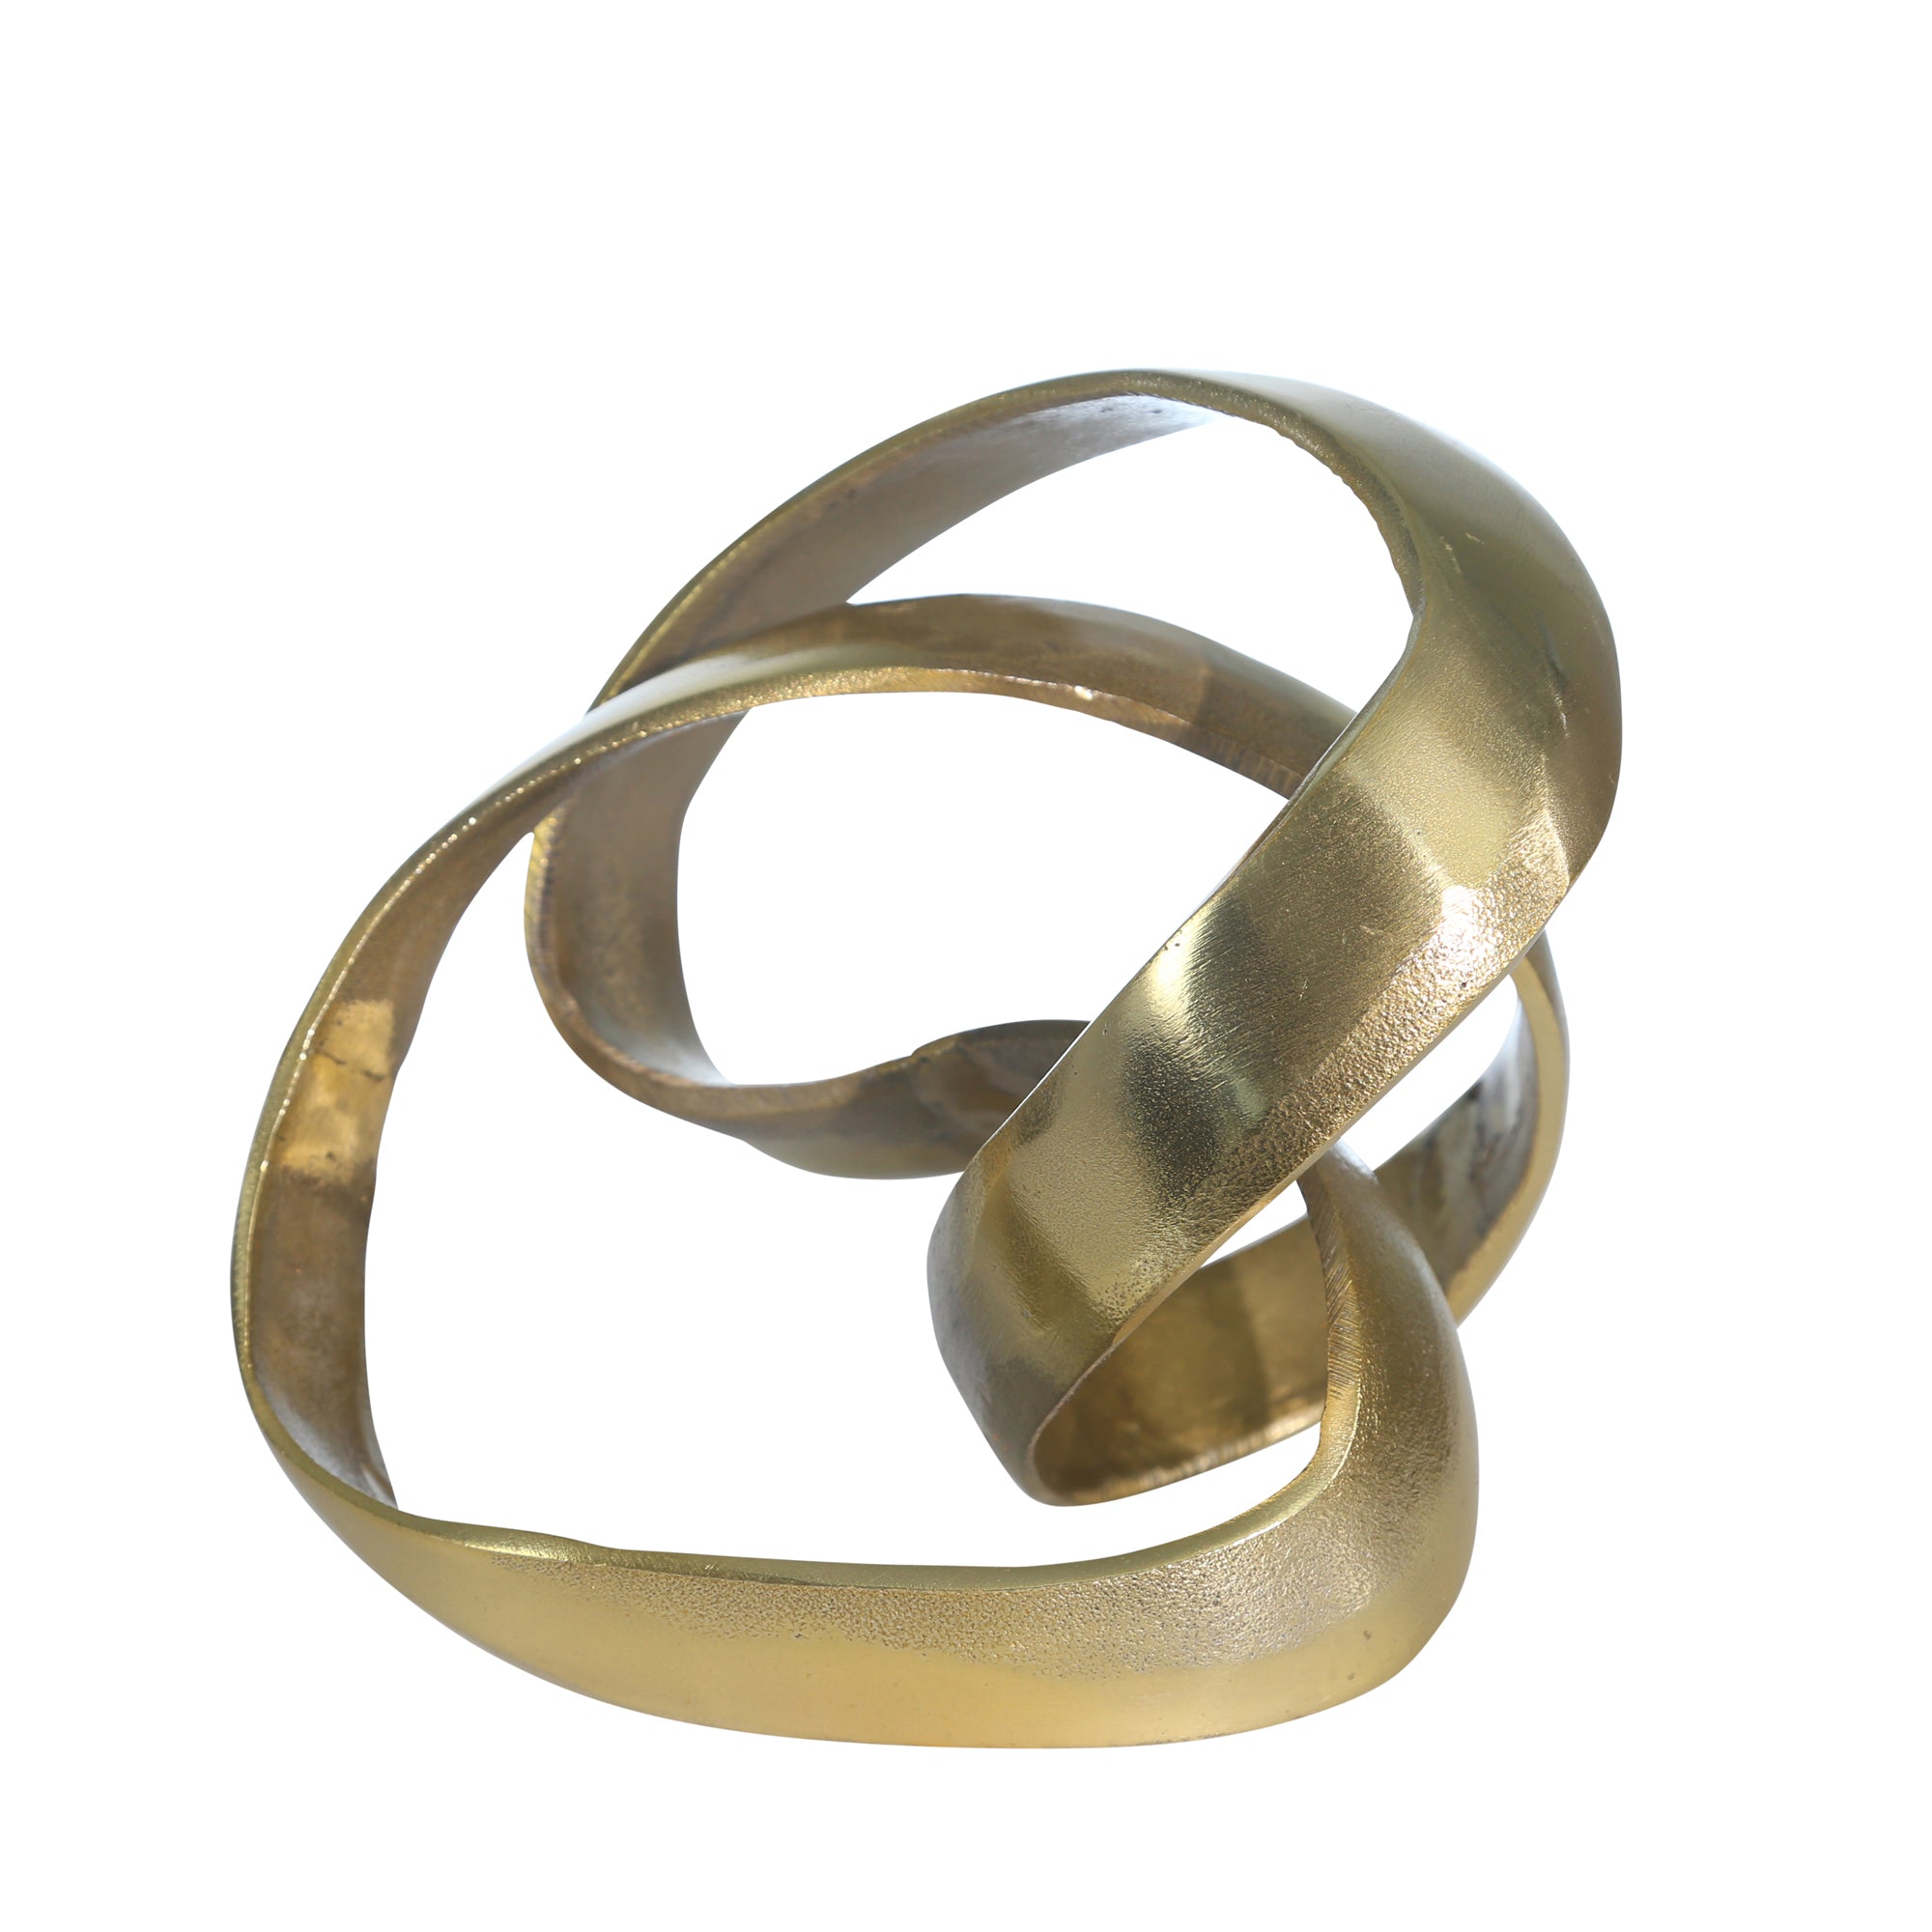 Aluminum Knot Sculpture - Gold